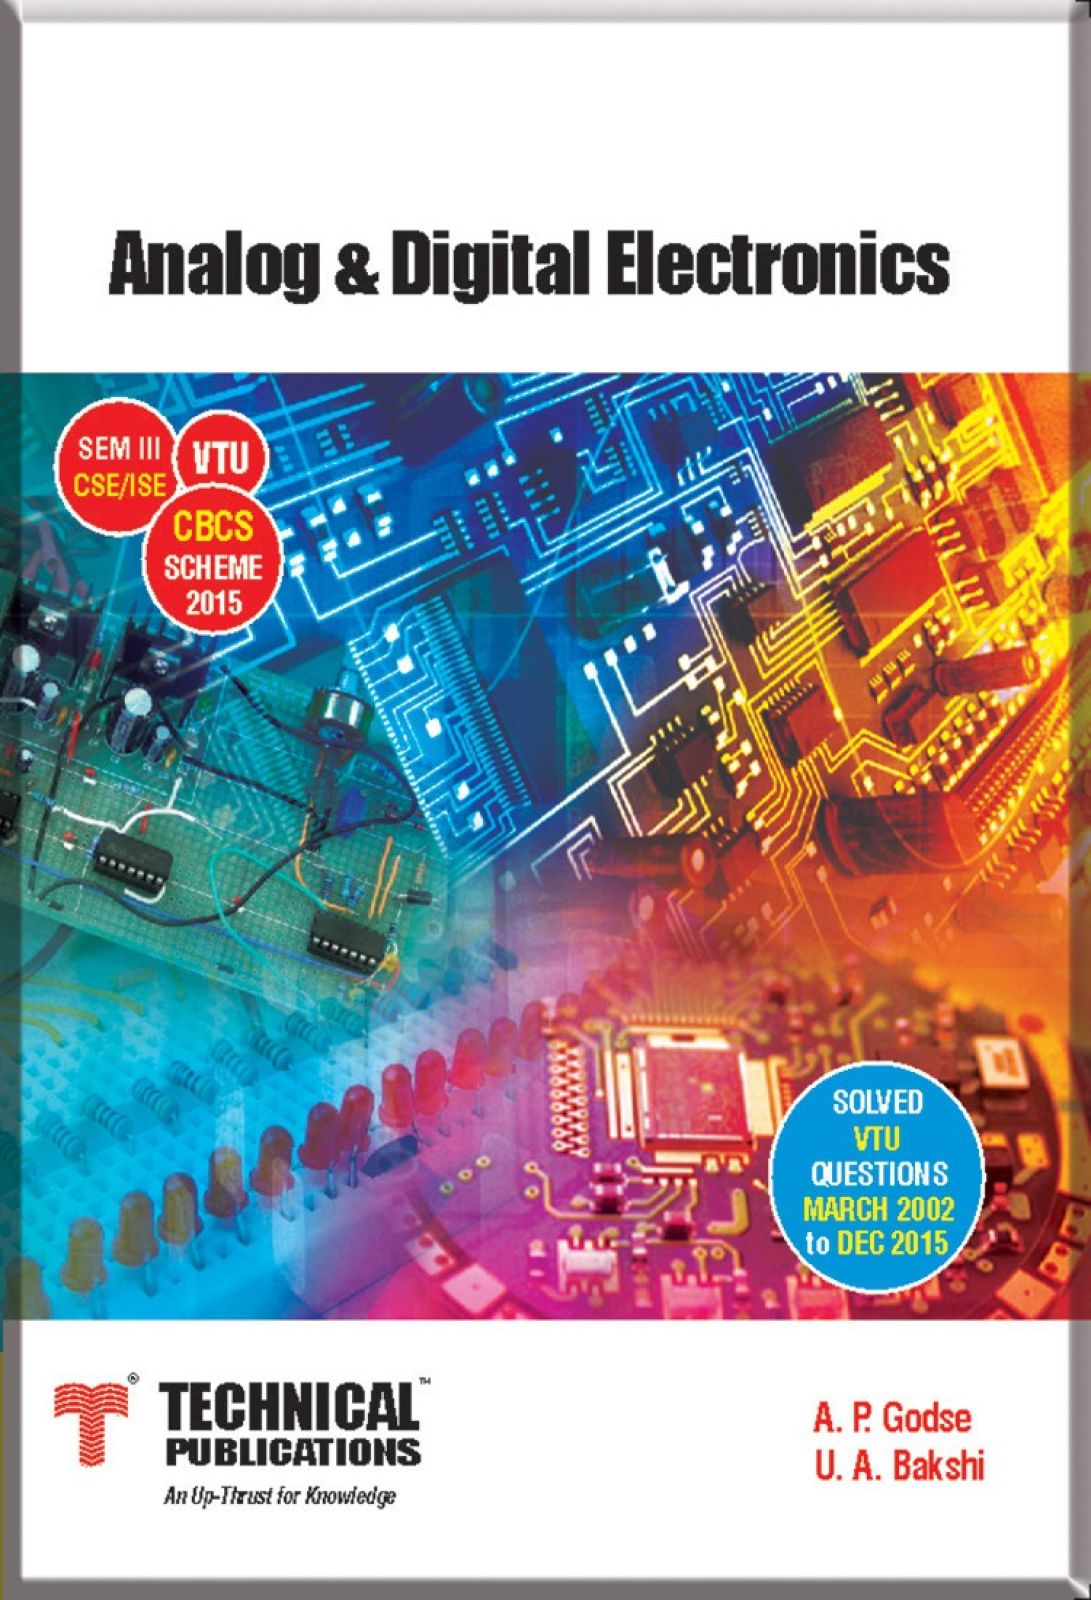 Analog & Digital Electronics By U. A. Bakshi A. P. Godse

